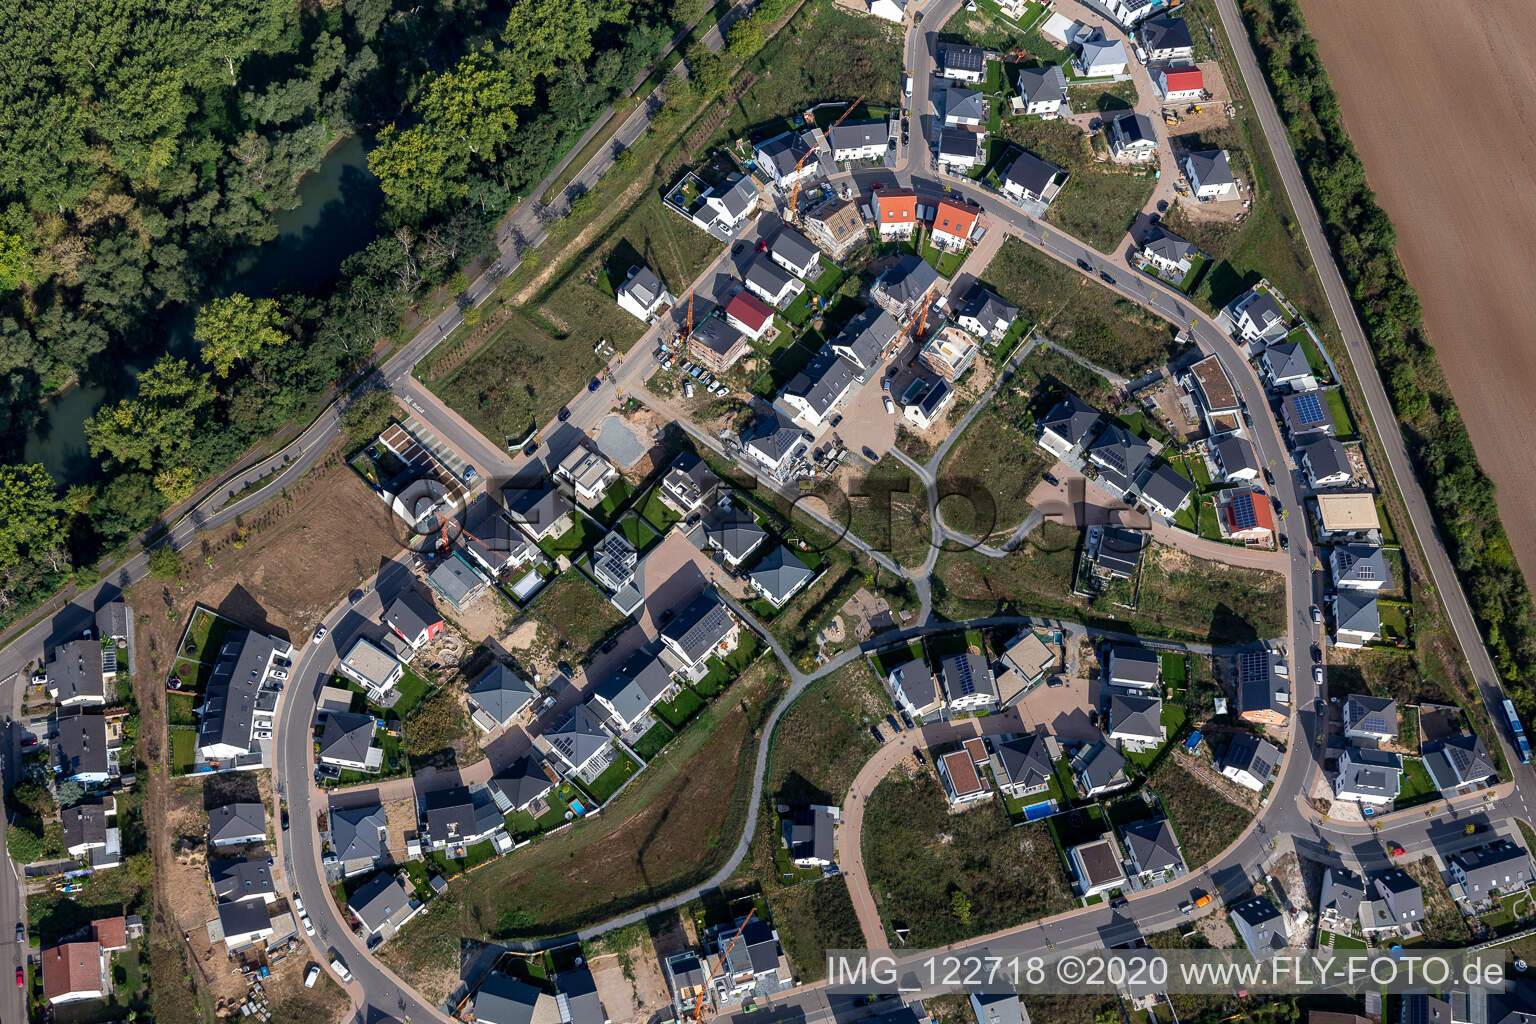 Aerial view of Altrheinbogen new development area in Ketsch in the state Baden-Wuerttemberg, Germany